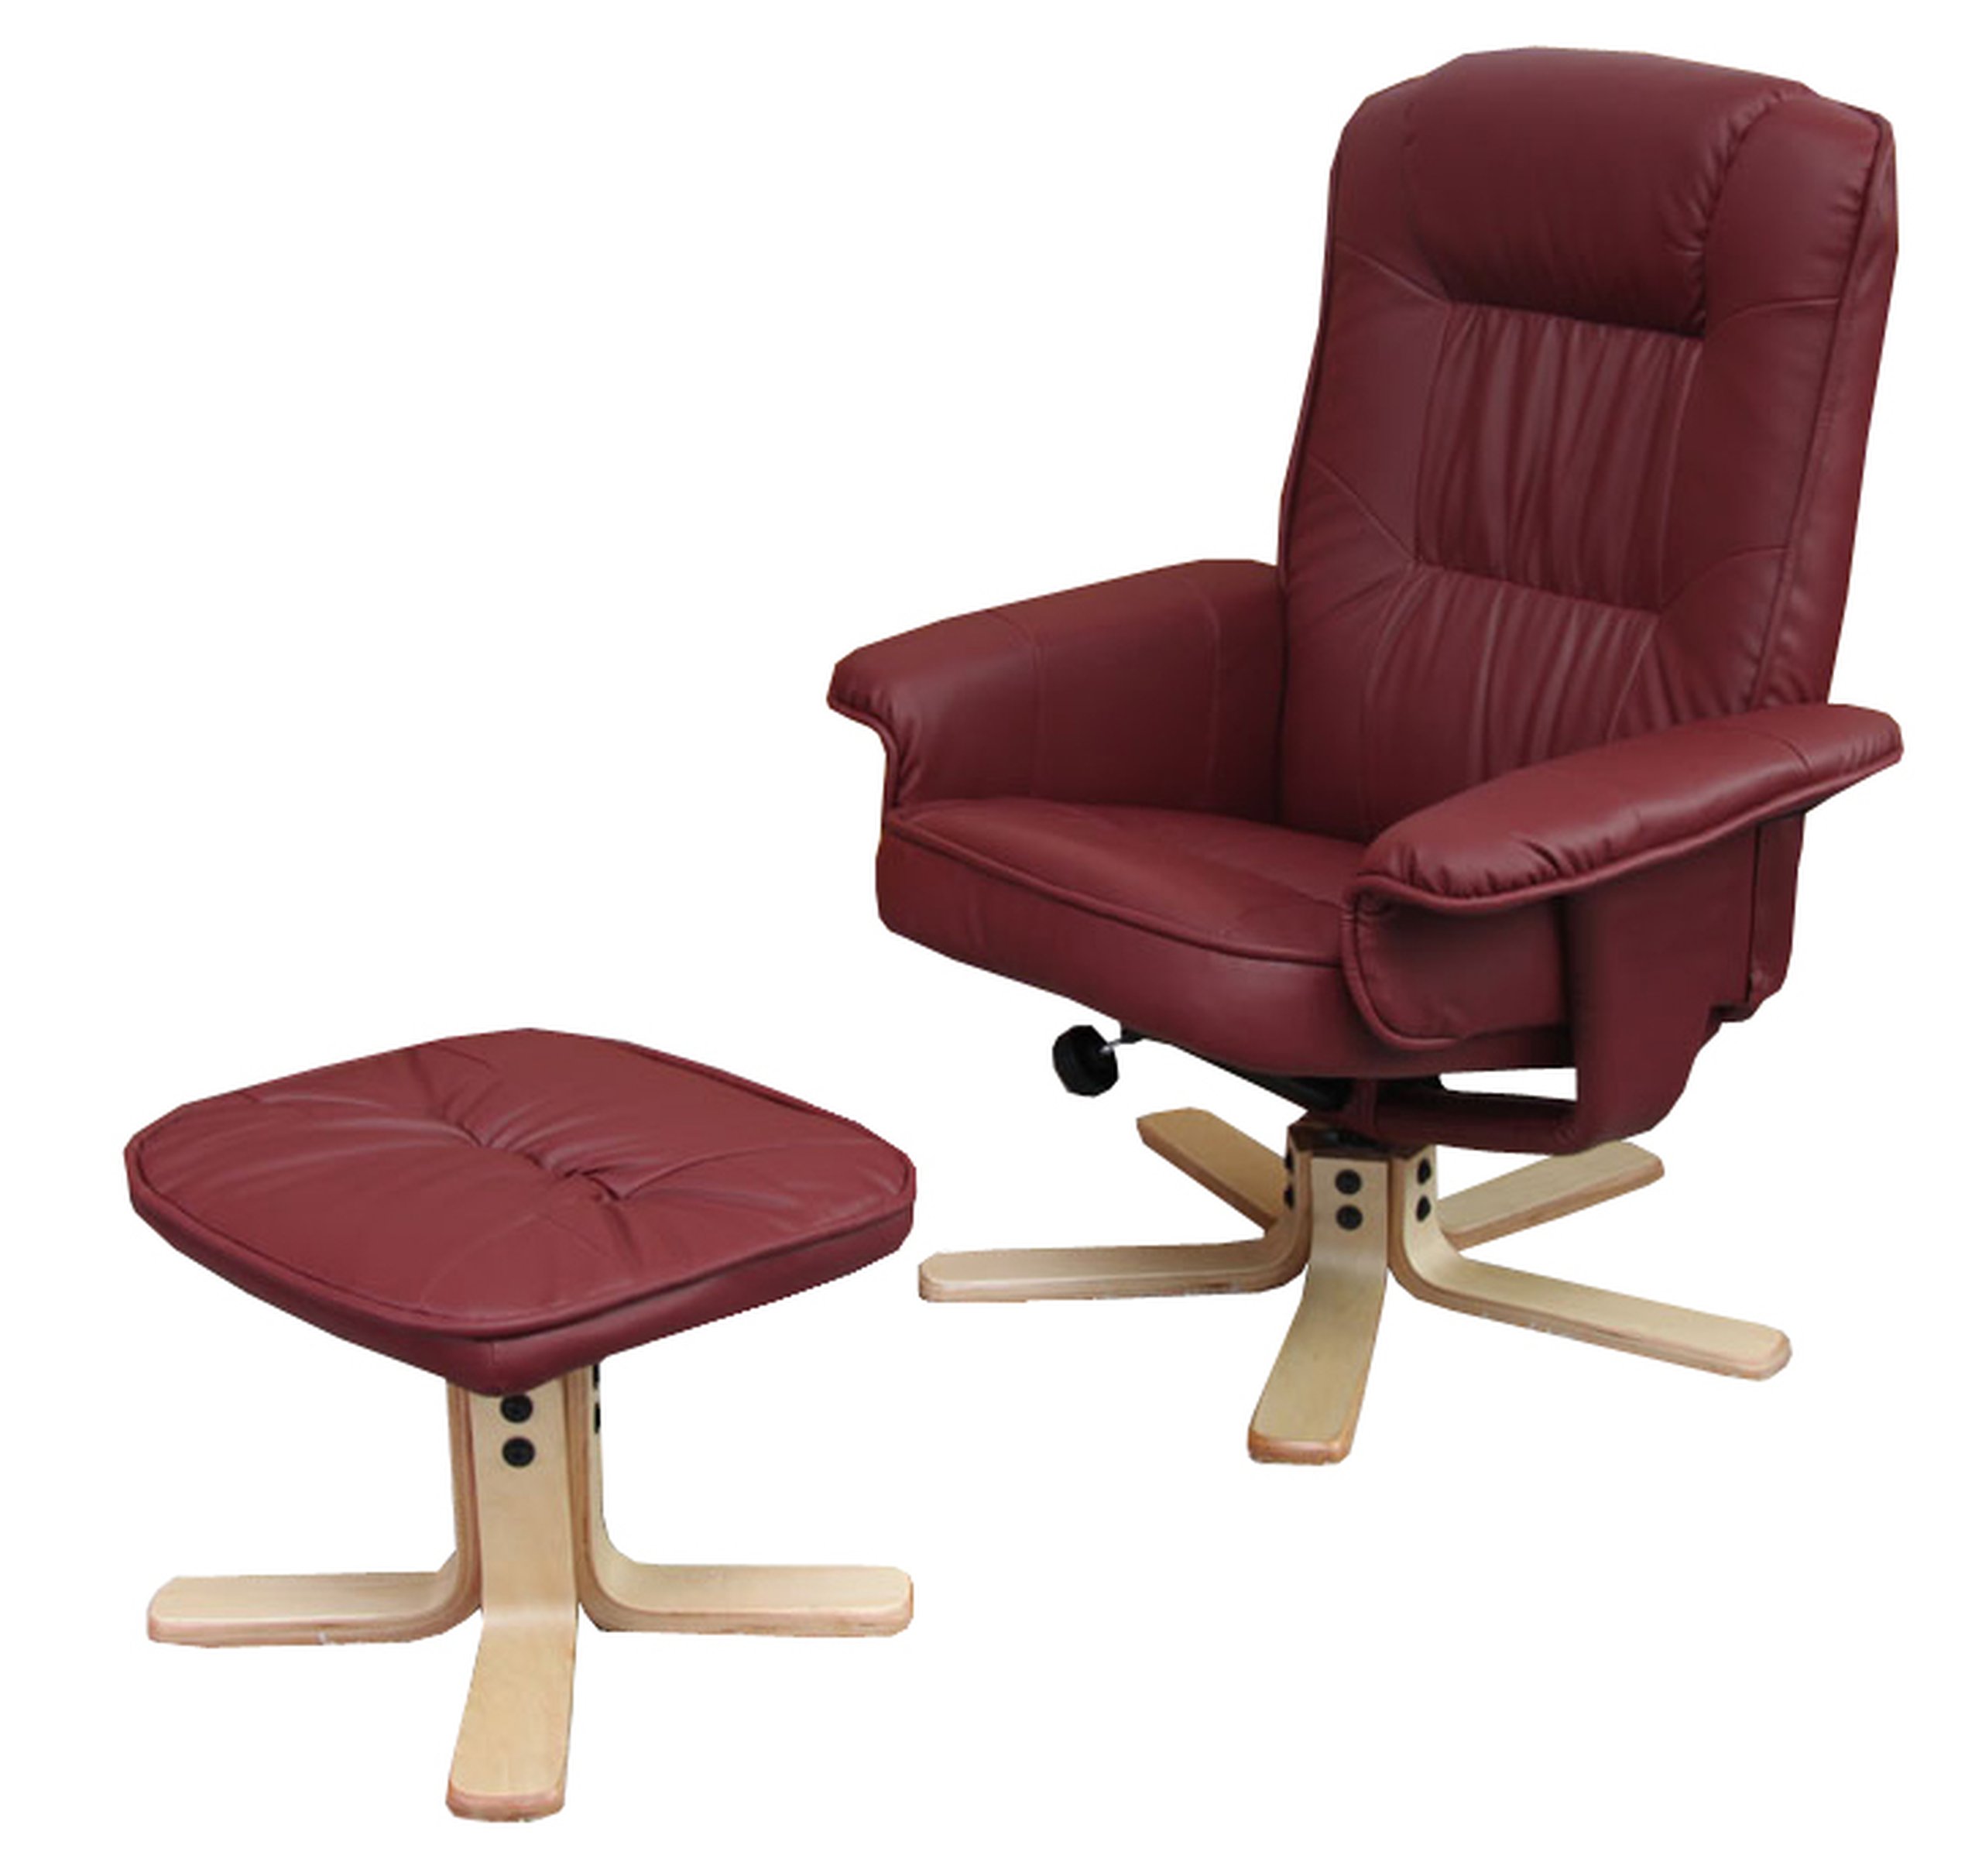 Relaxsessel Fernsehsessel Sessel mit Hocker M56 schwarz creme rot bordeaux  weiß | eBay